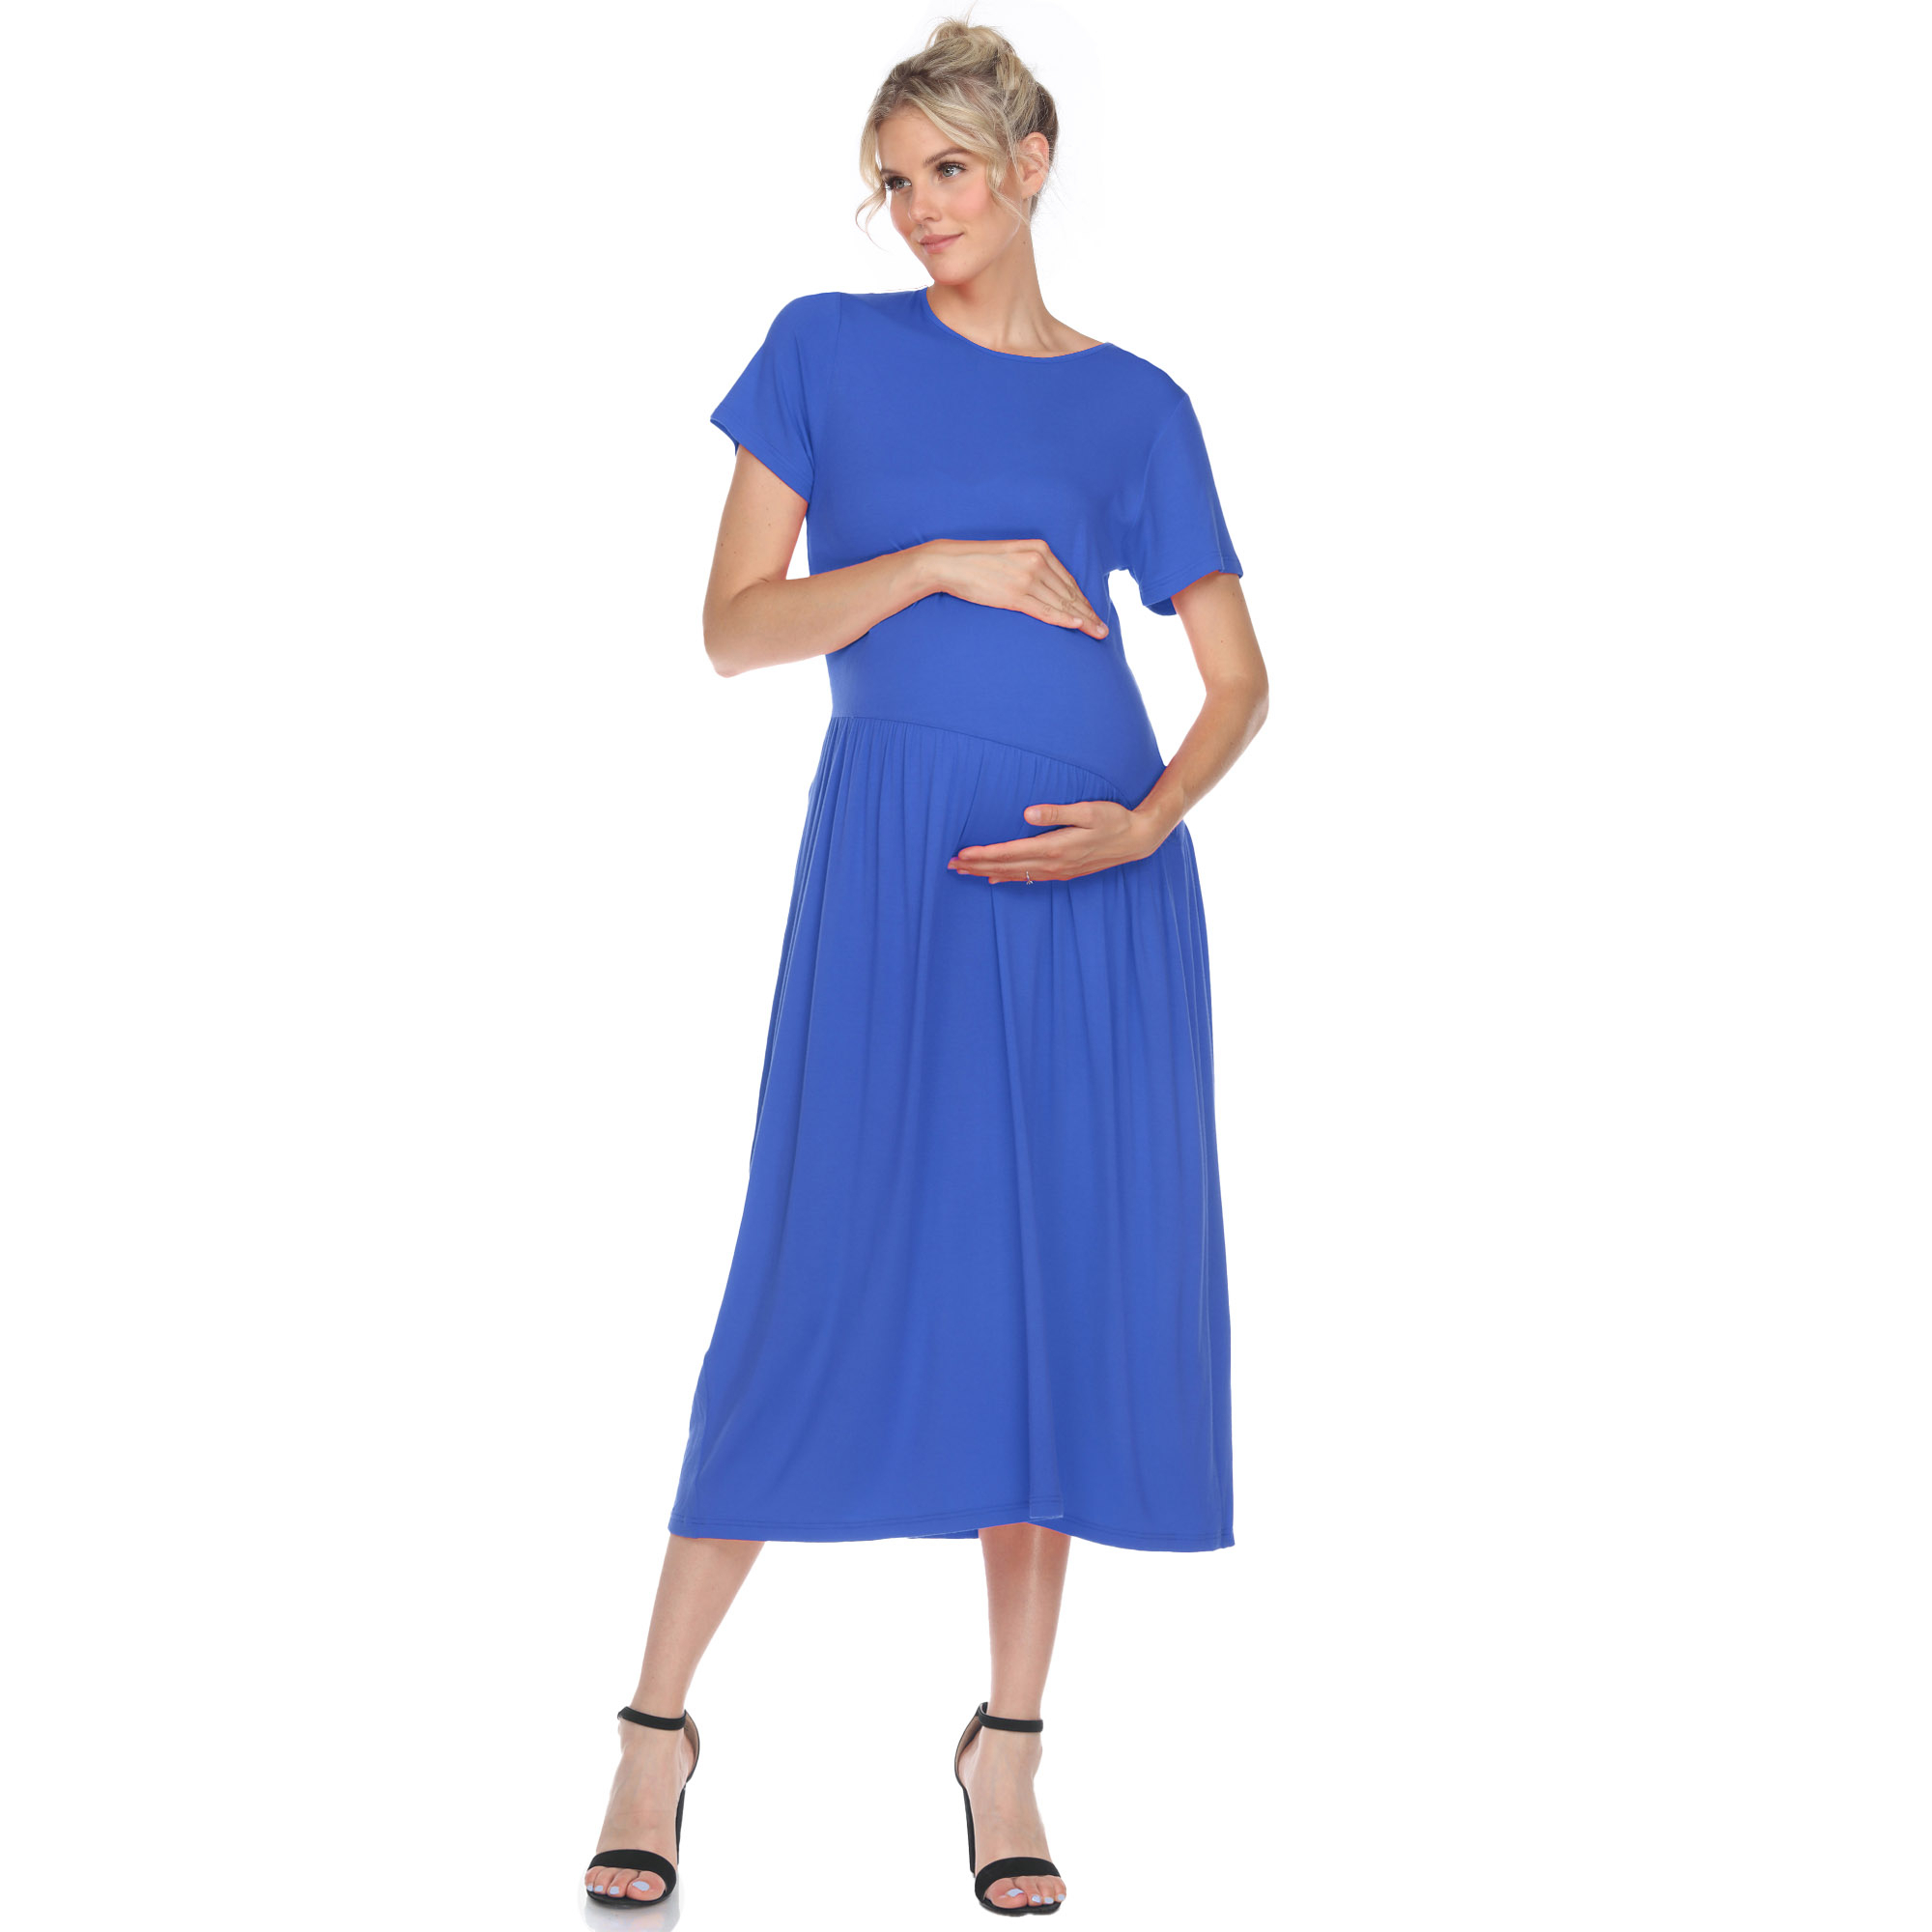 White Mark Womenâs Maternity Short Sleeve Maxi Dress - Royal, Large